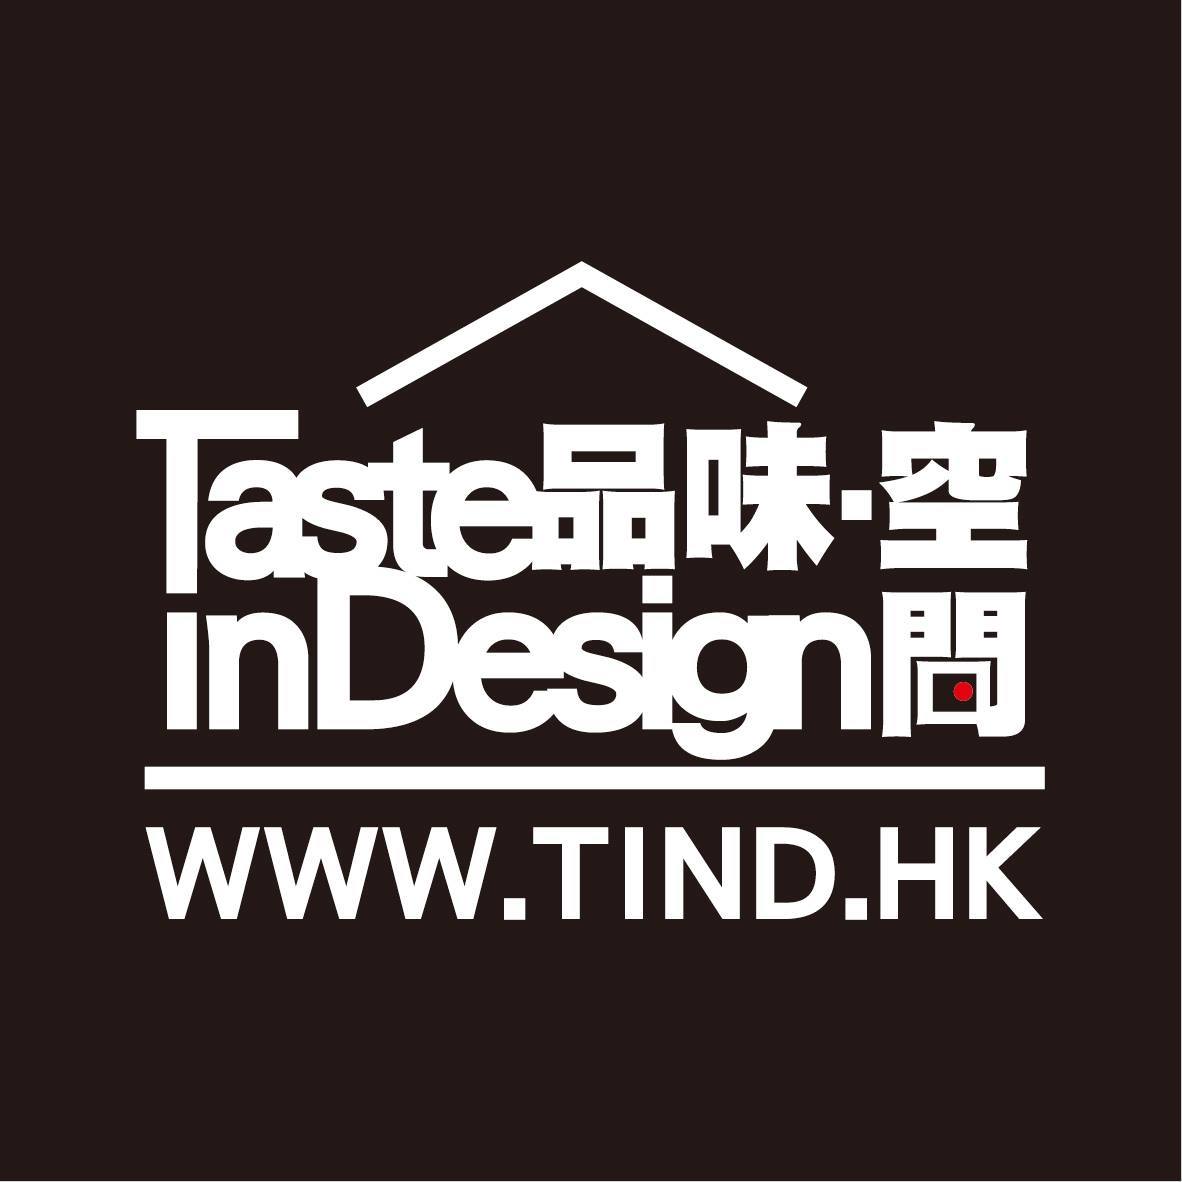 Taste Interior Design